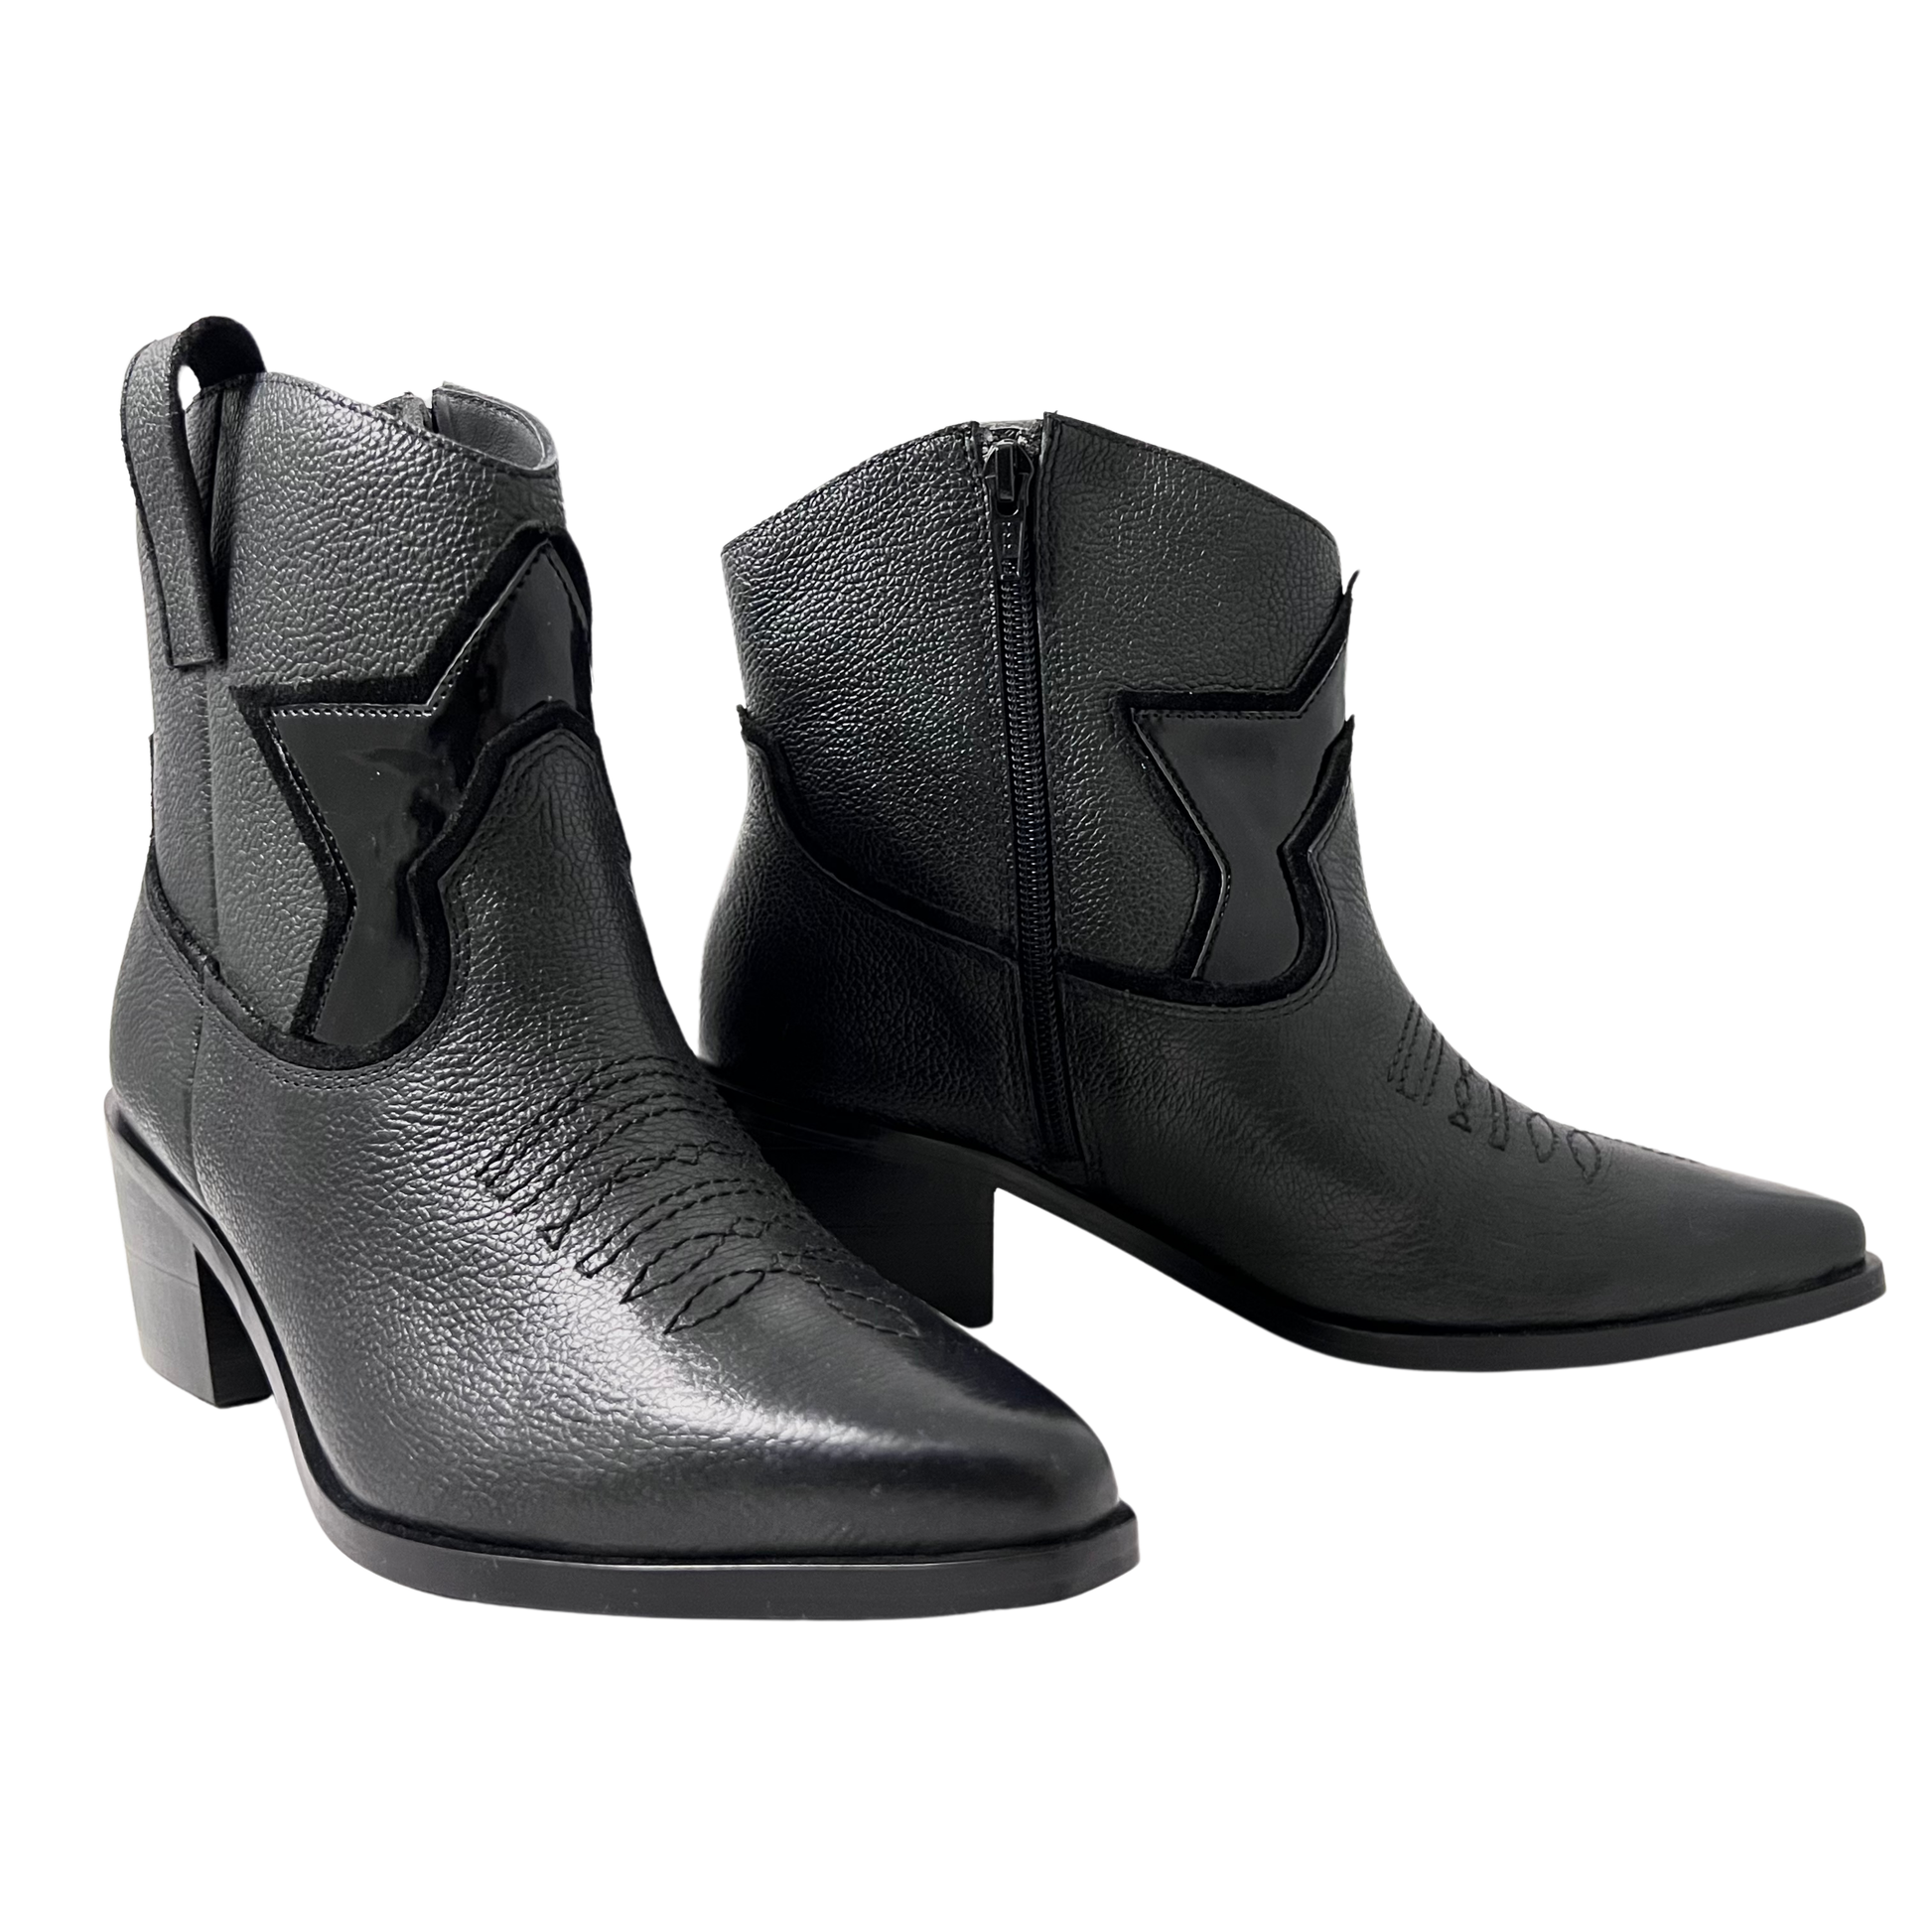 designer star western leather ladies boot in black color